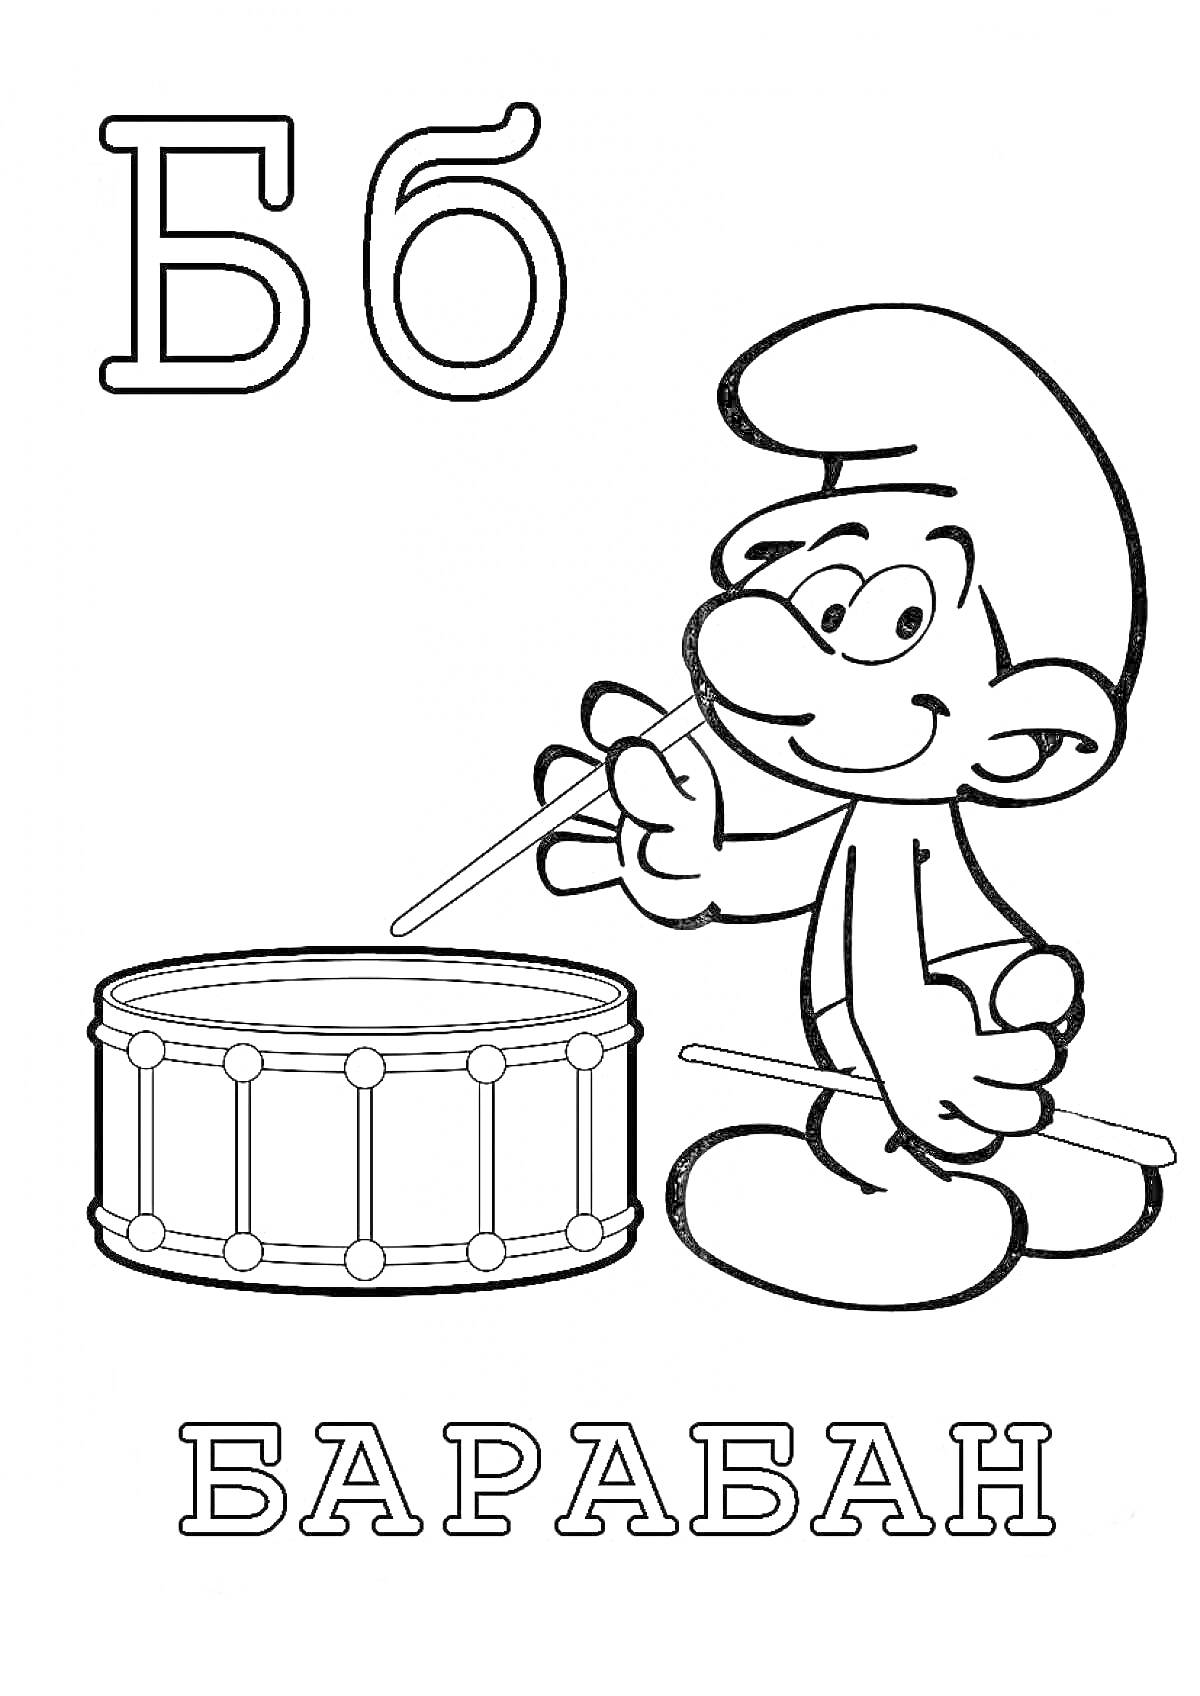 Буква Б, персонаж и барабан